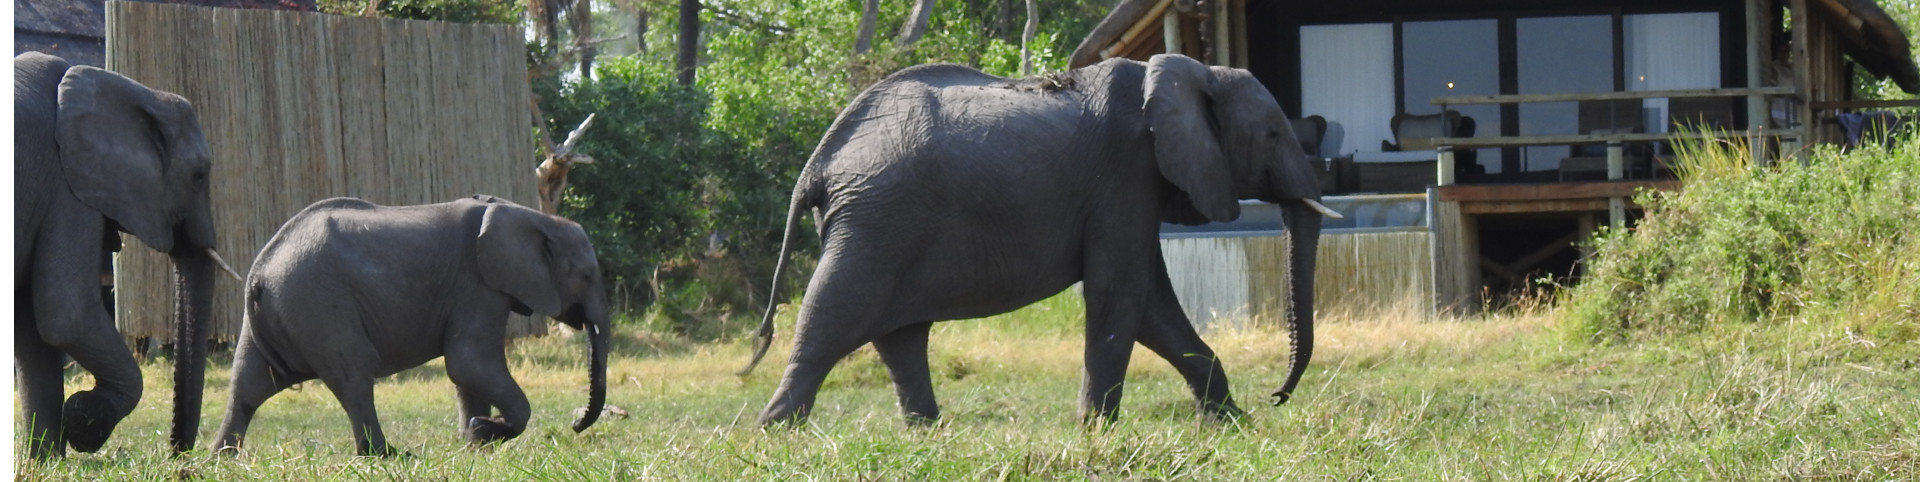 Elephant_3018_Botswana_1920x482